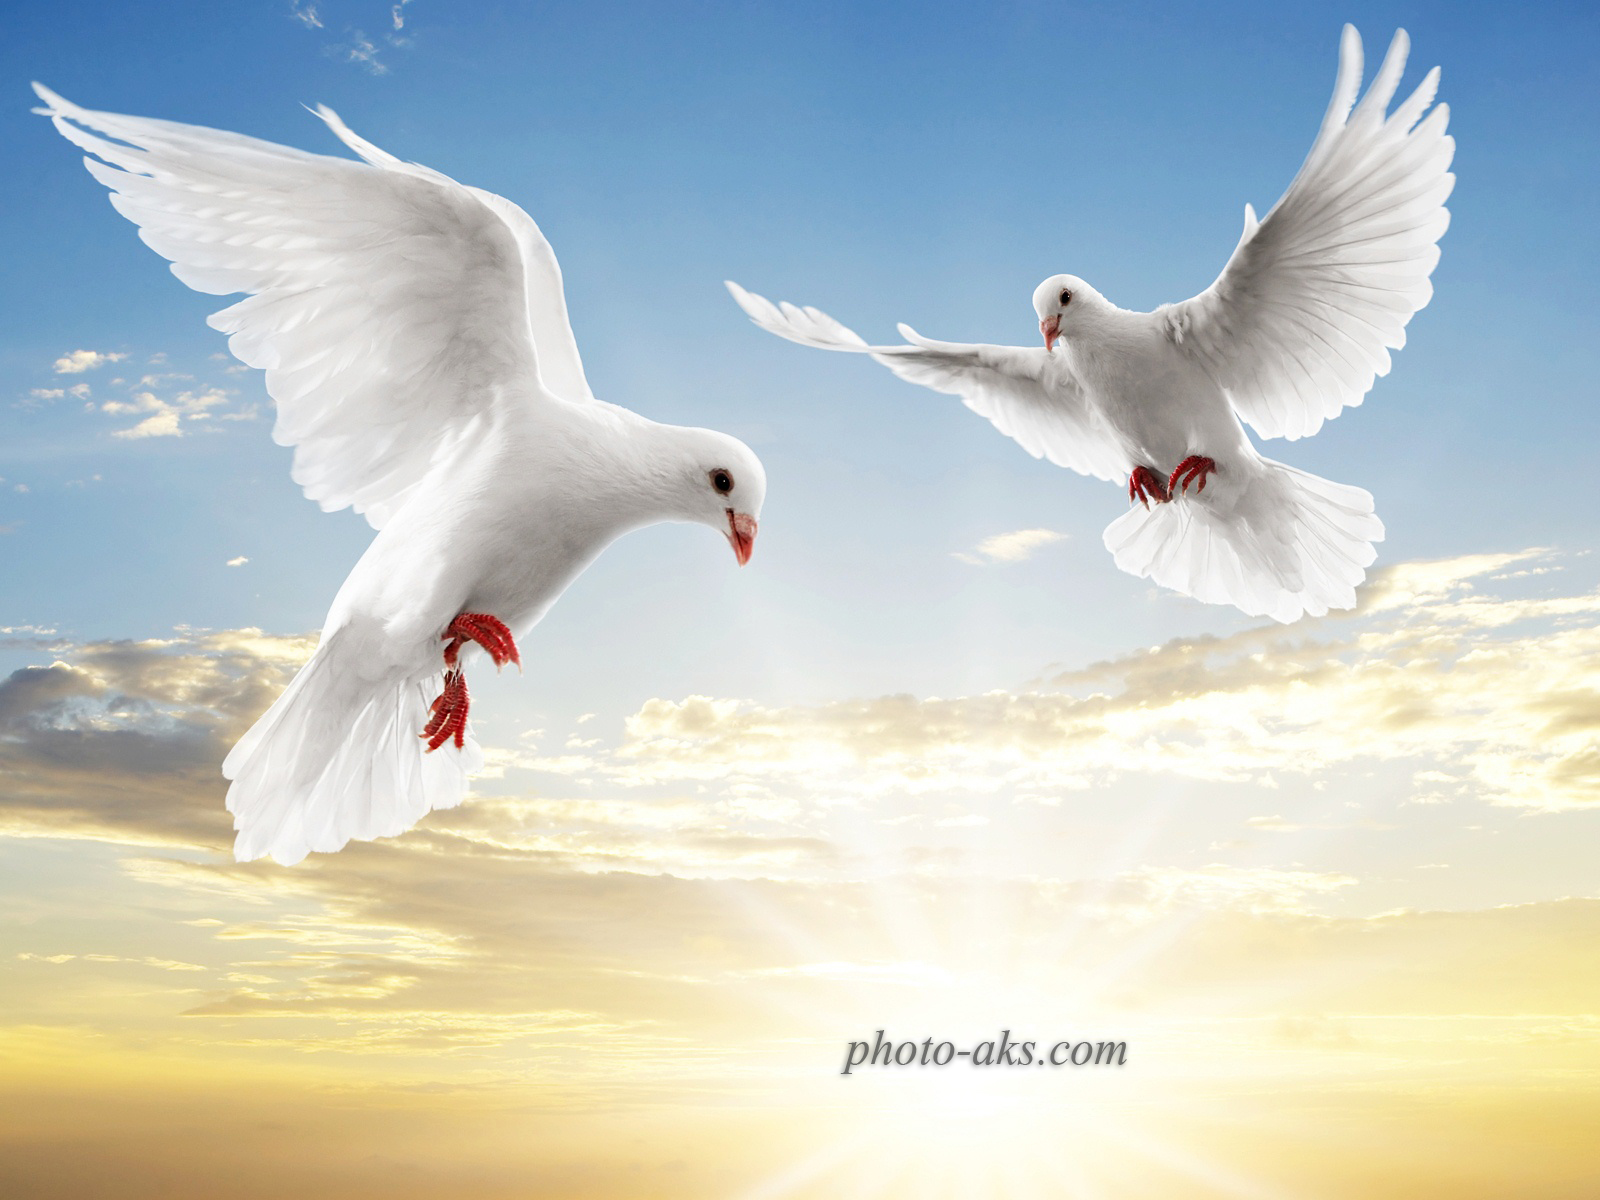 dove-fly(photo-aks.com).jpg